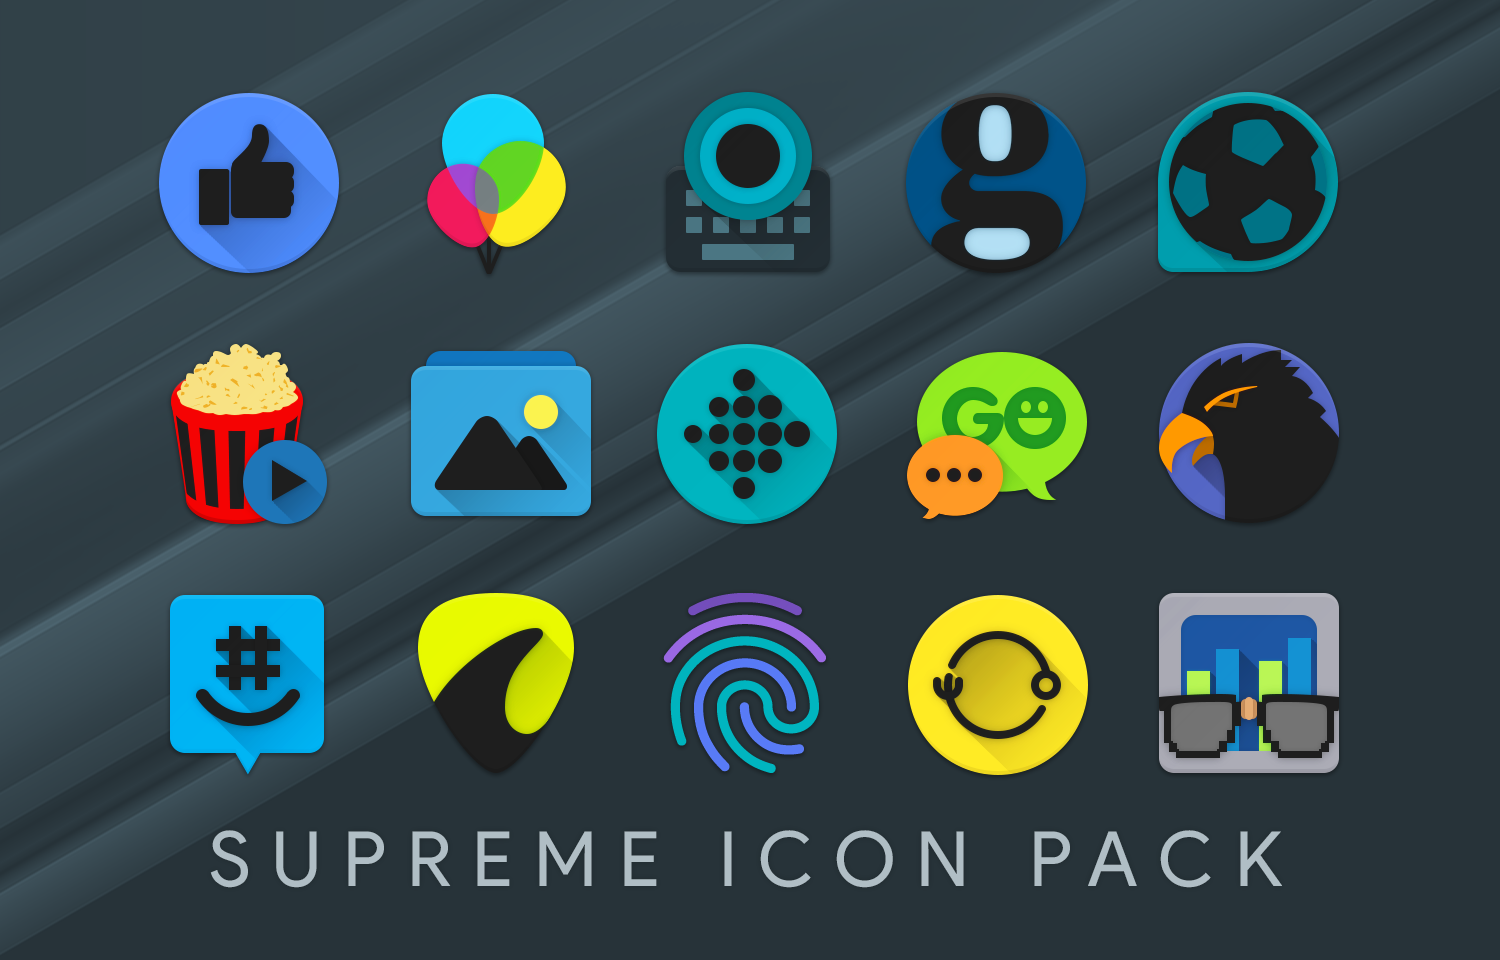 Icon pack studio pro. Icon Pack. Icon Pack Android. Иконки для Нексус. Популярные лаунчеры для игр значок.